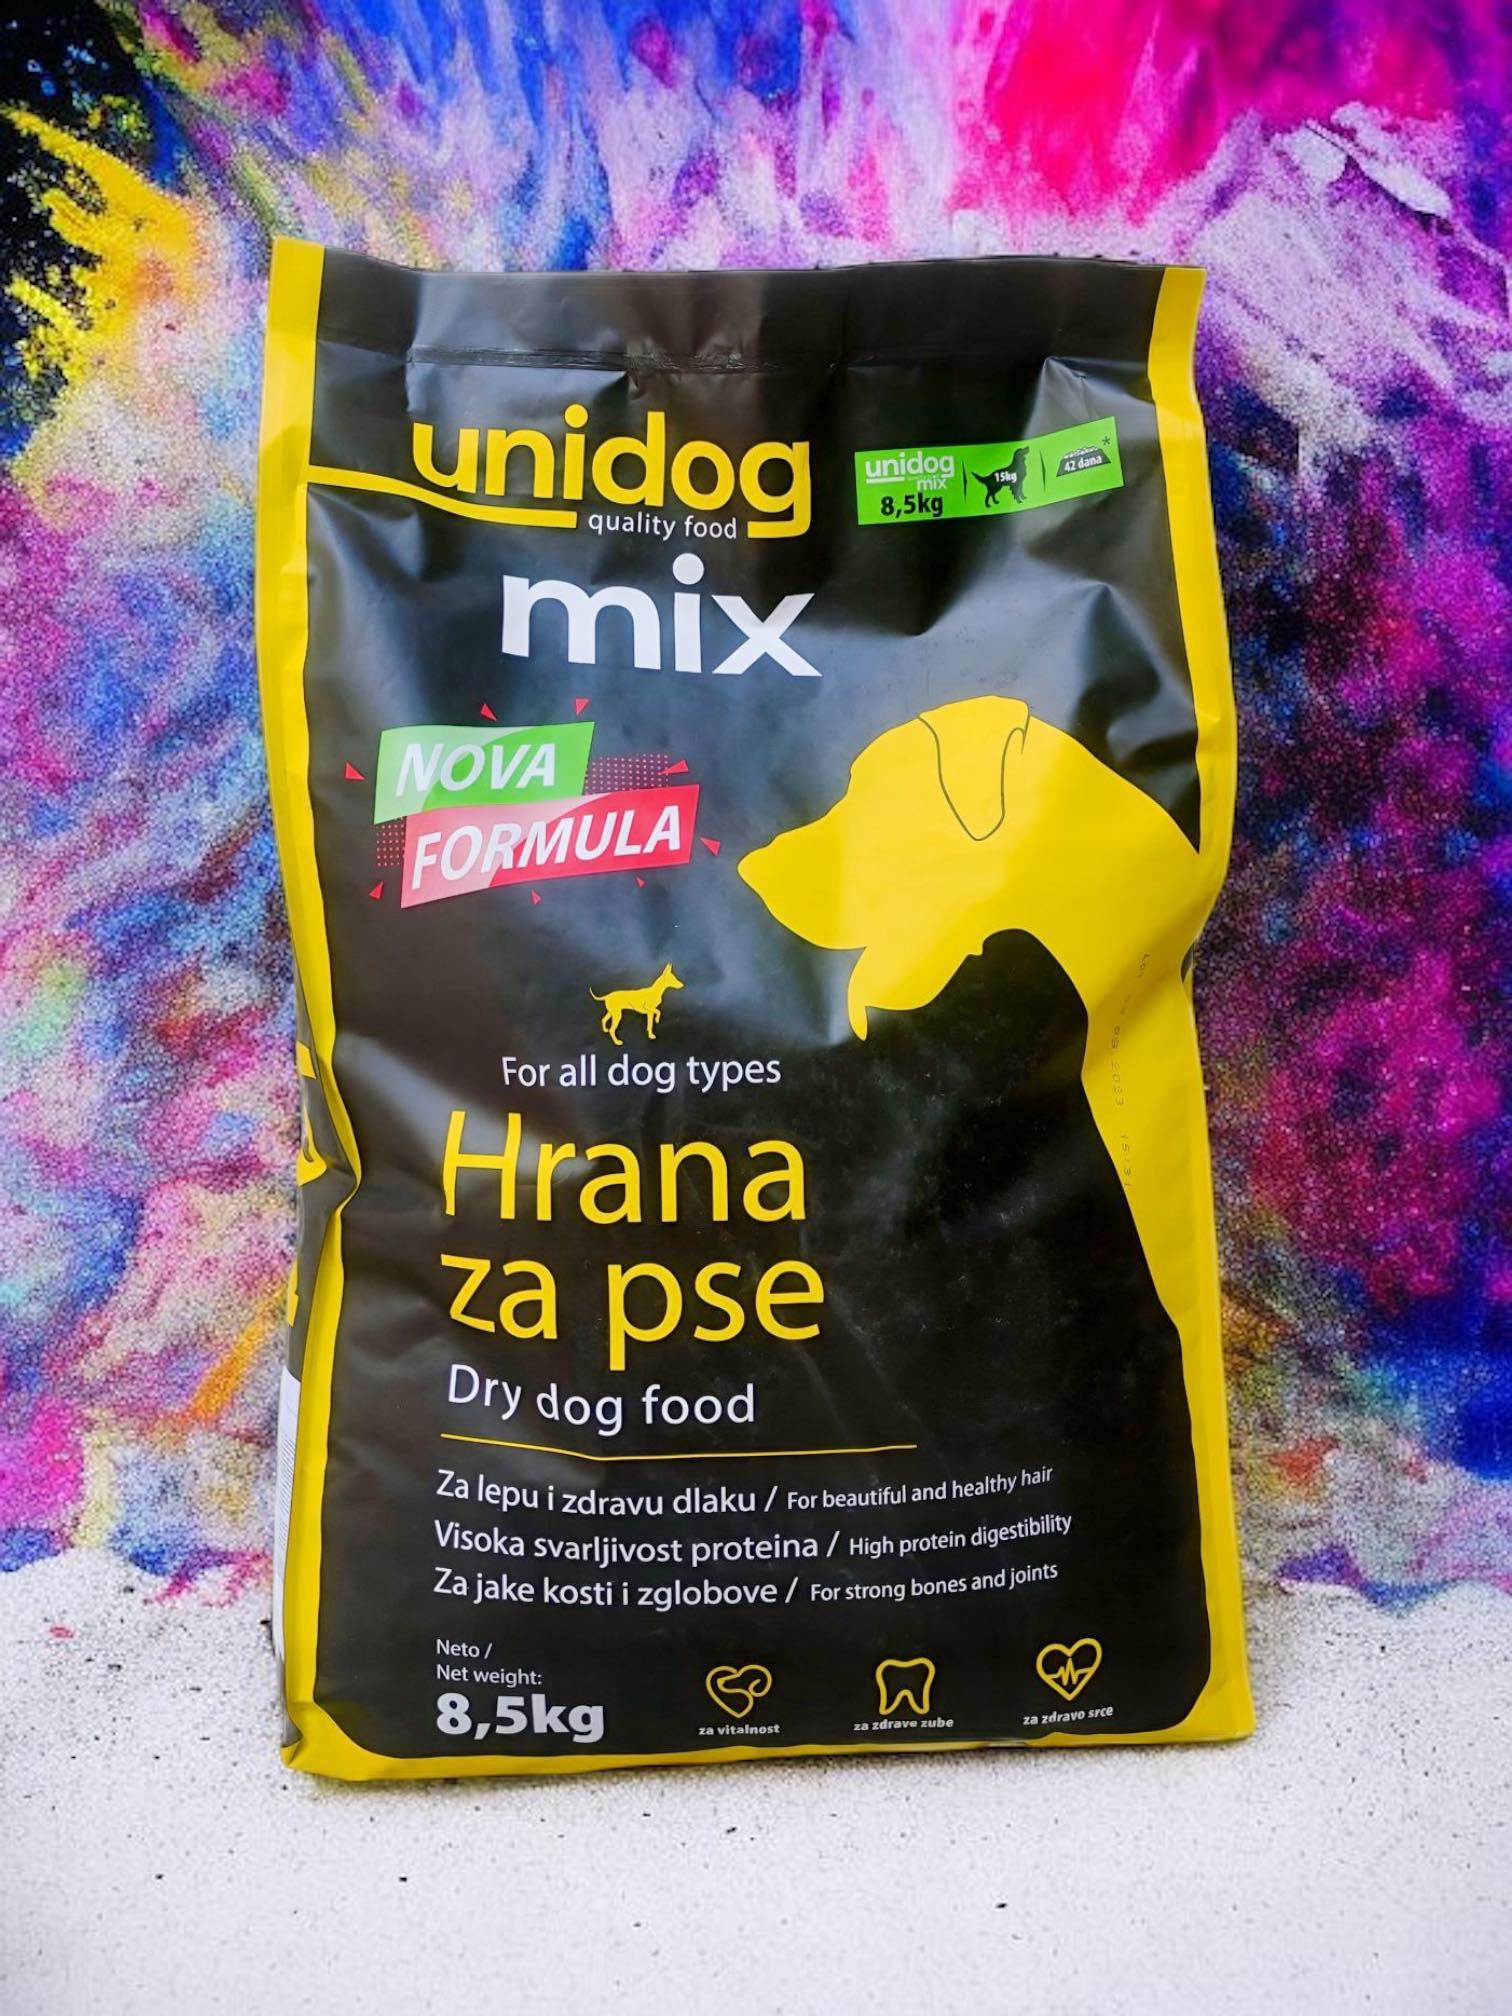 FRENDY Храна за возрасни кучиња од сите раси Uni dog mix 8.5kg